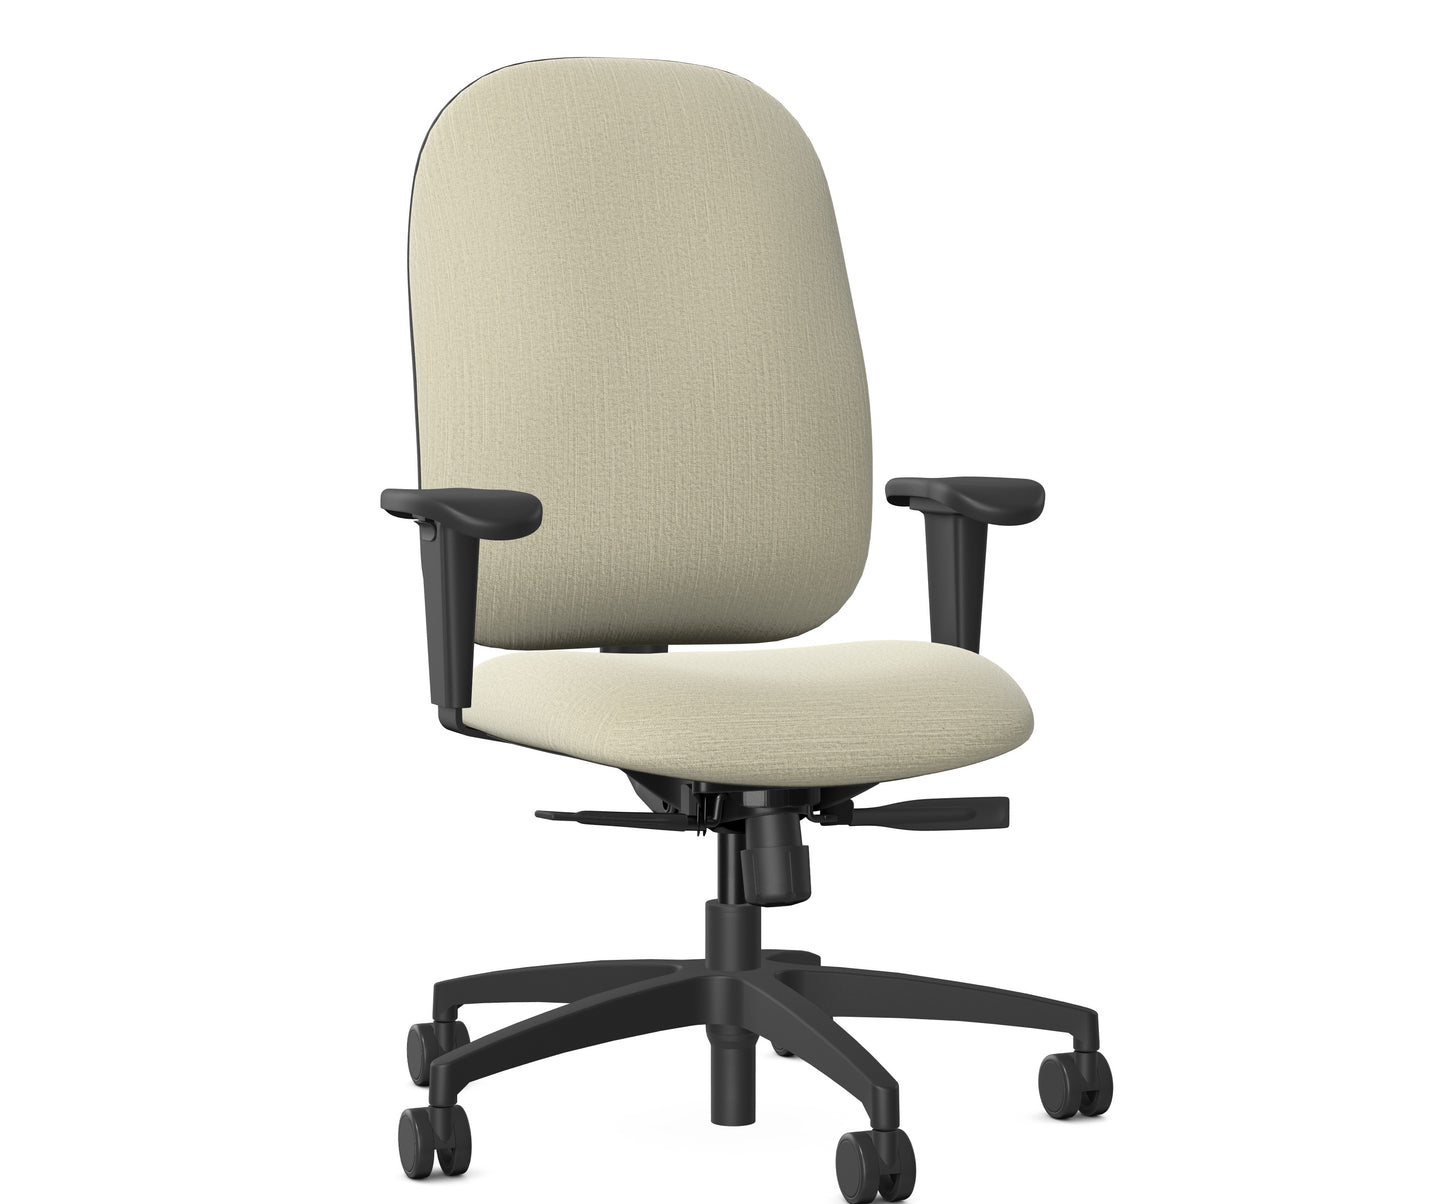 Presto High-Back Office Chair